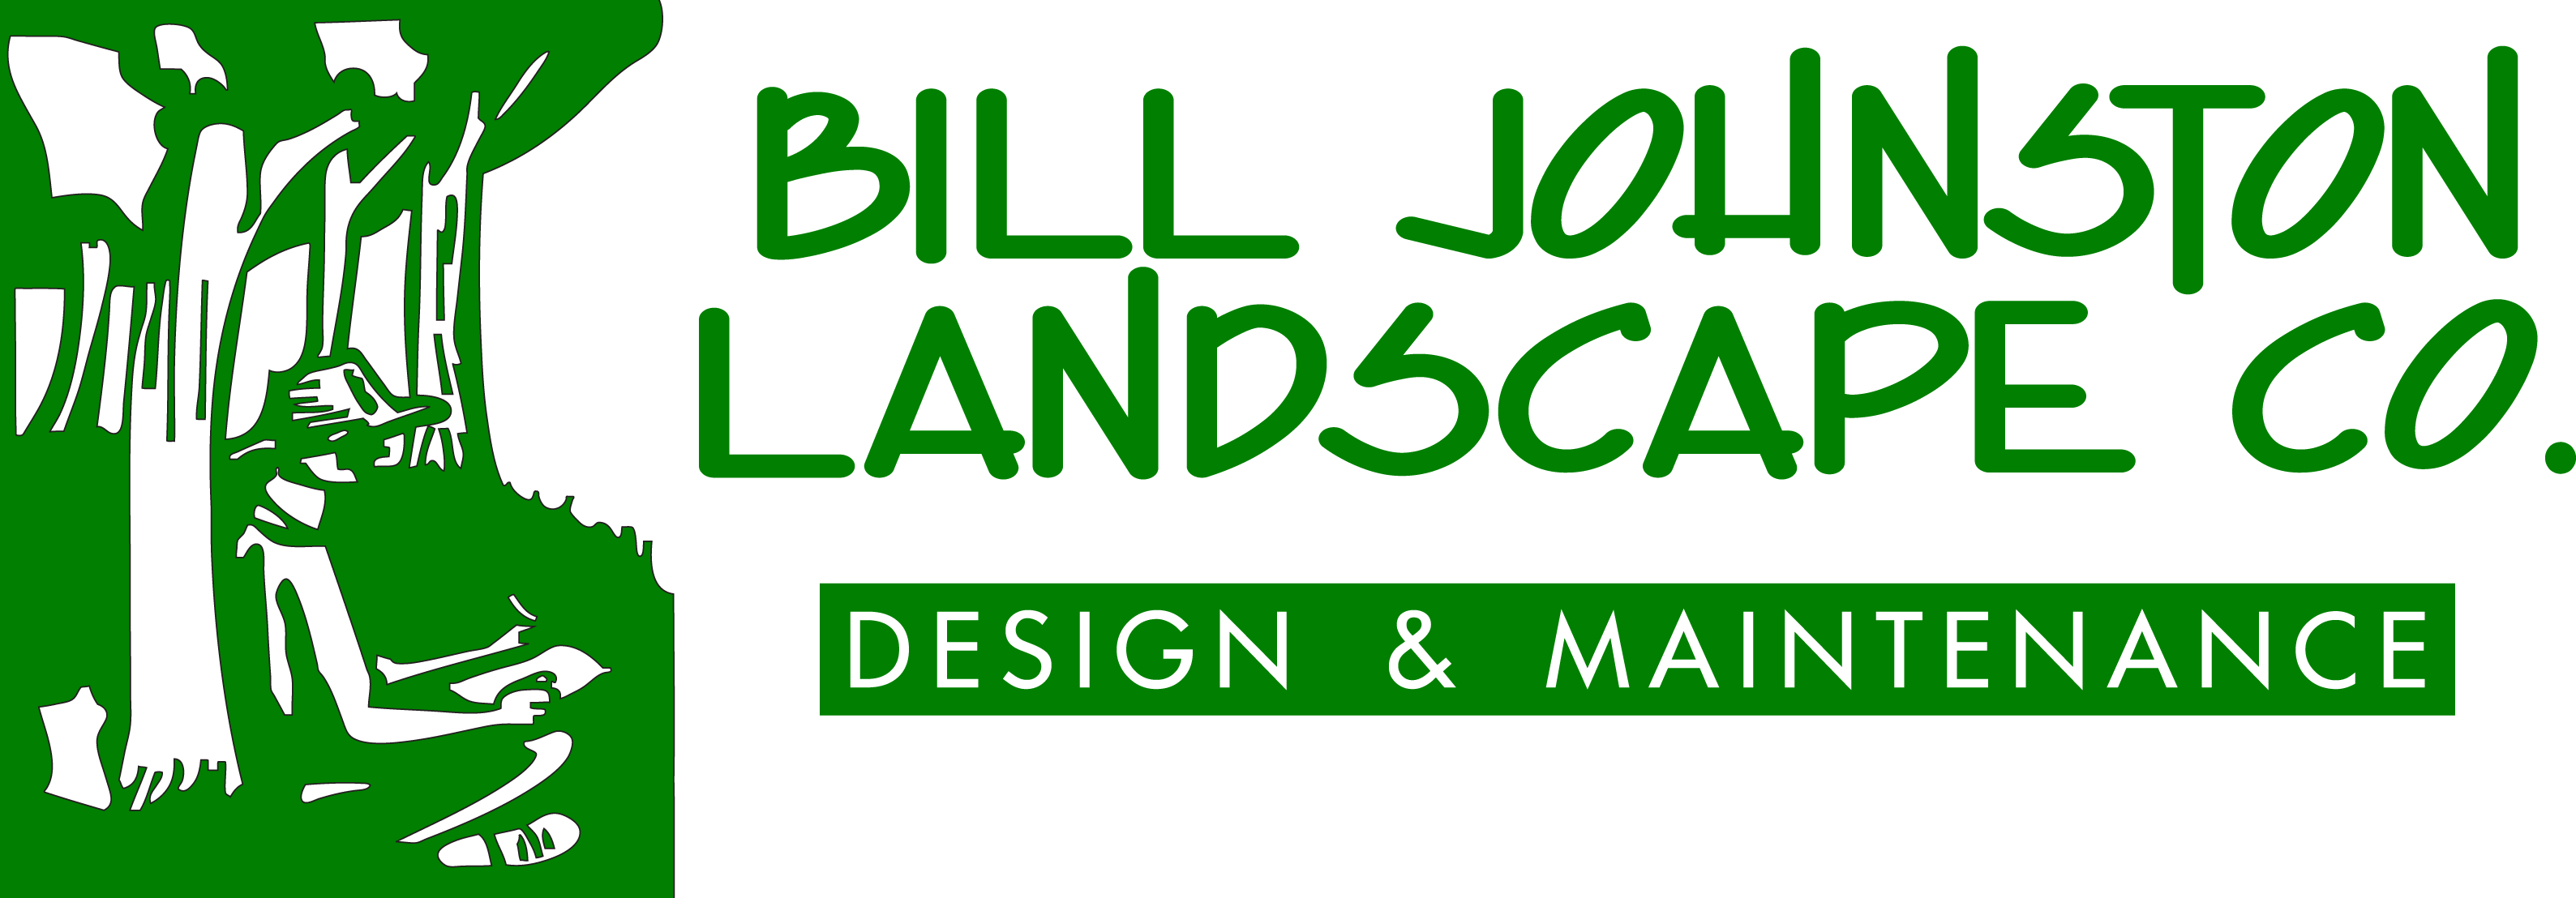 Bill Johnston Landscape Company